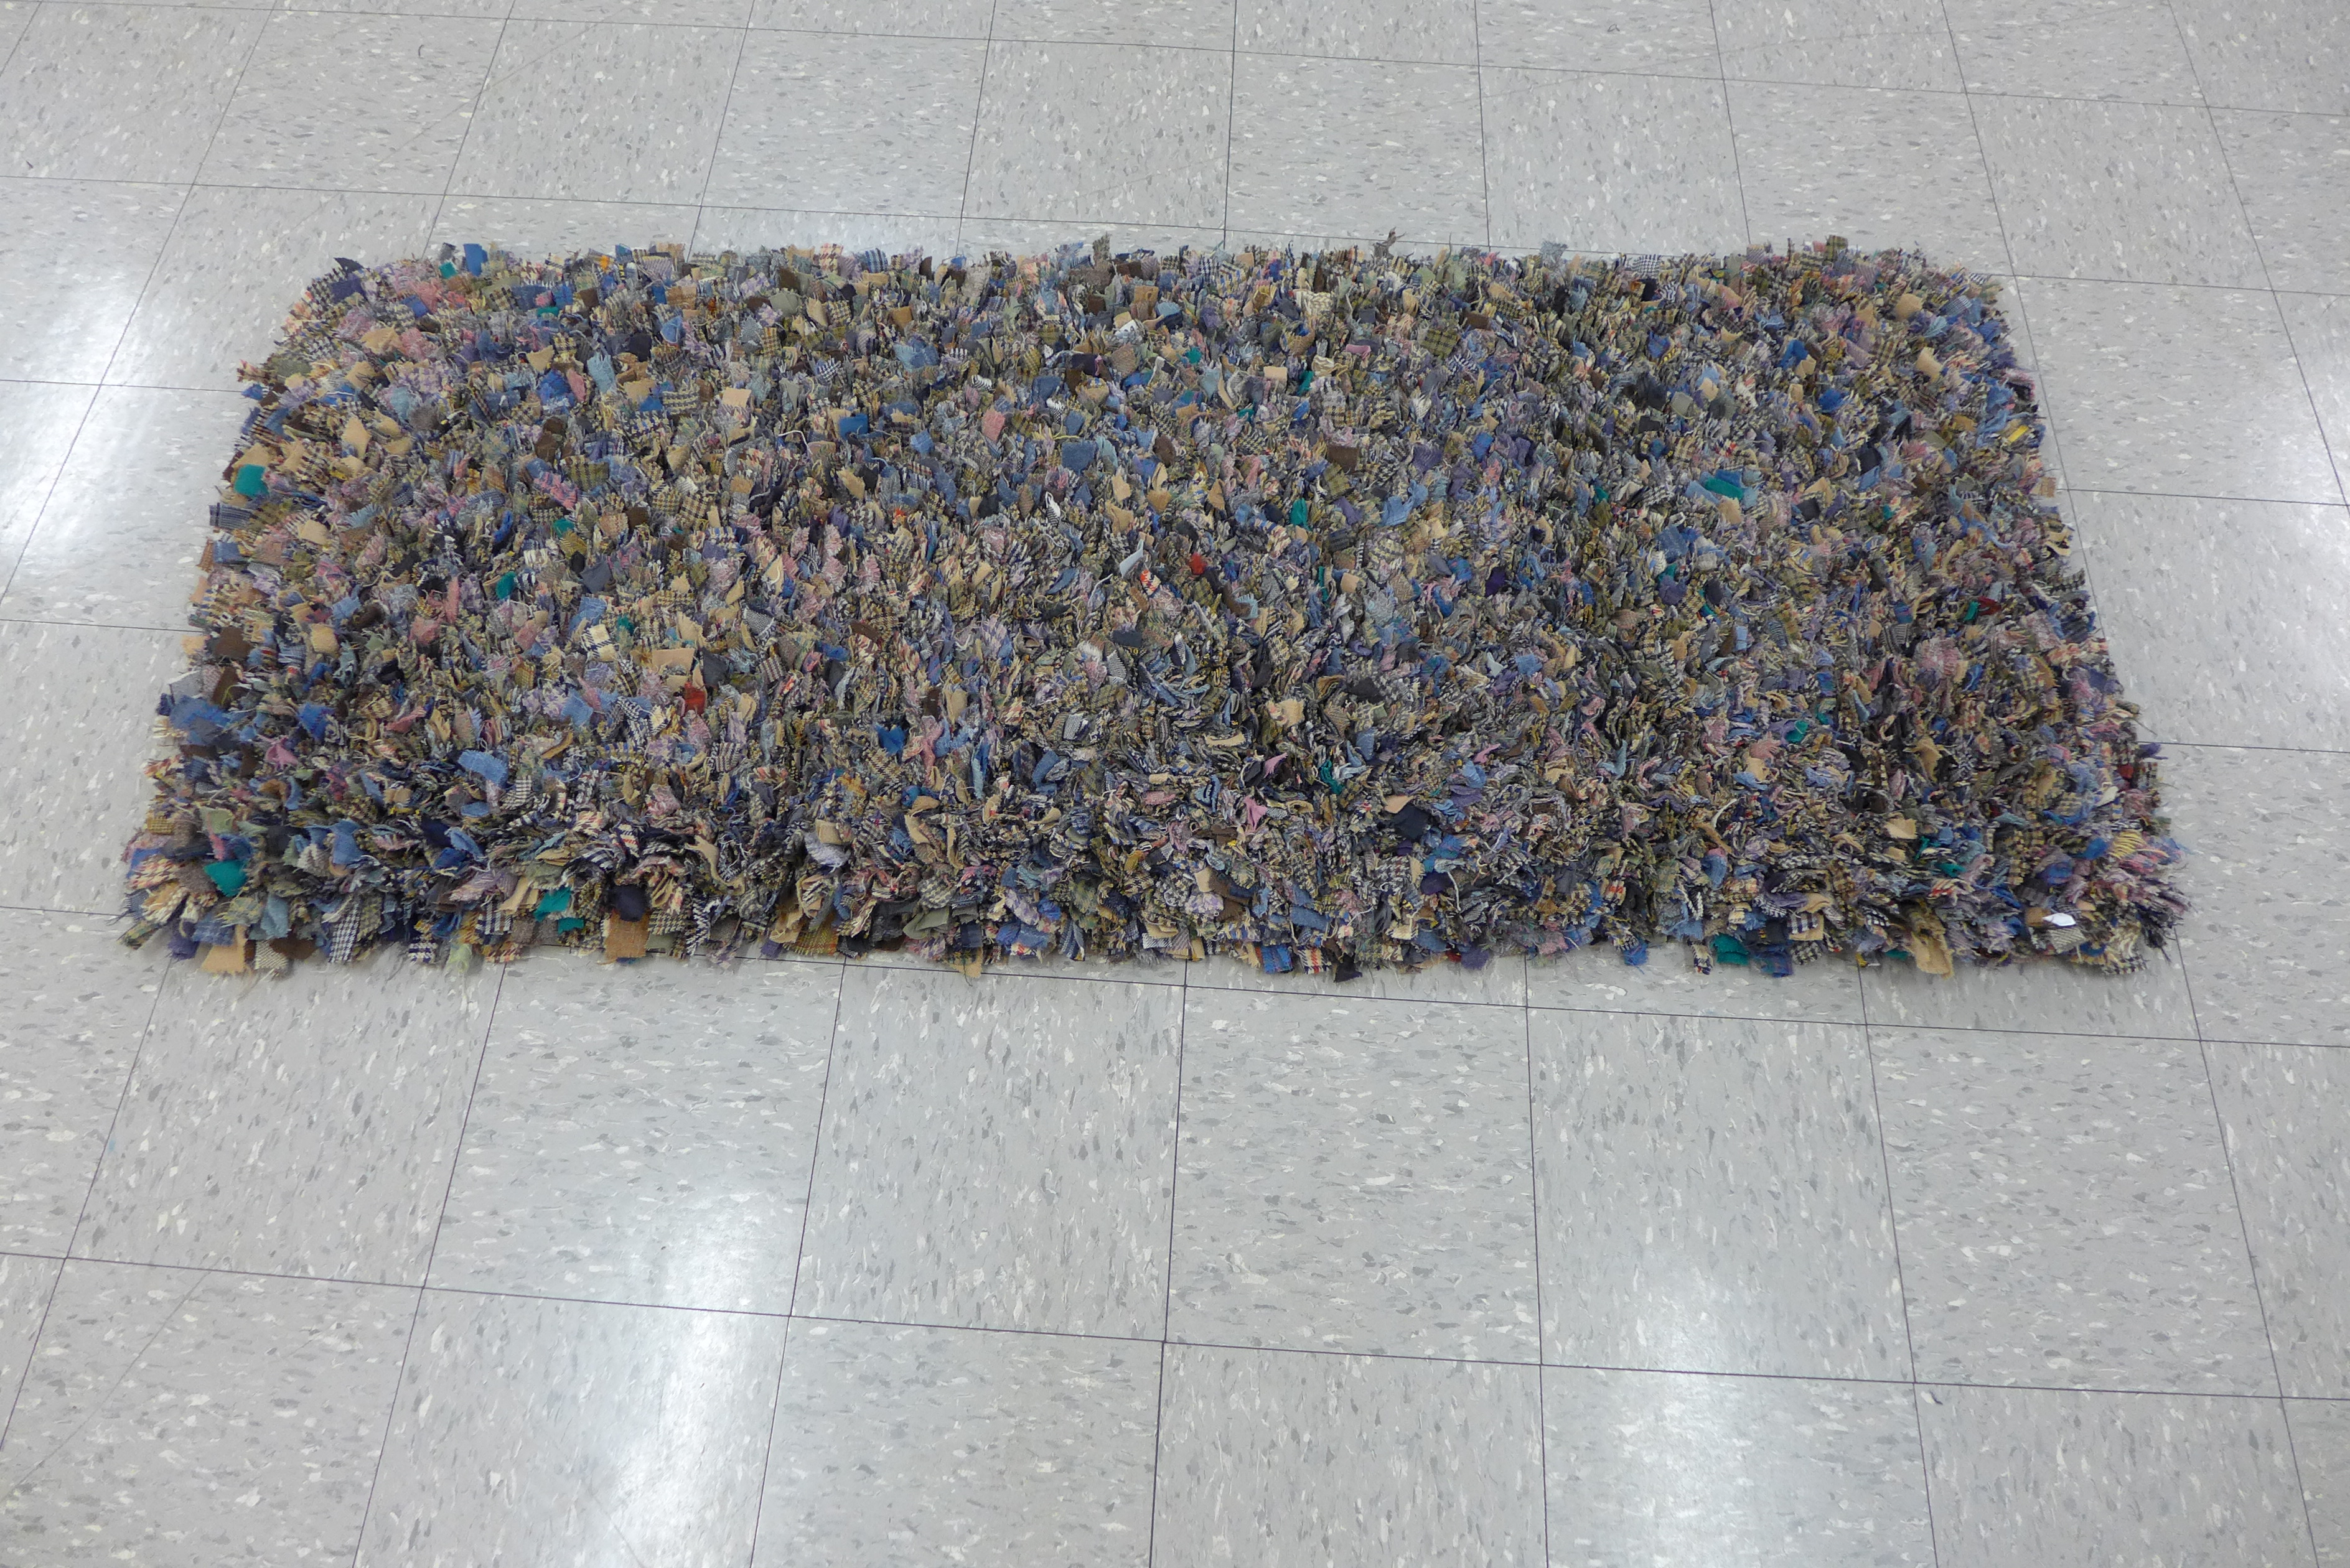 A rag runner rug, 187 x 80cms